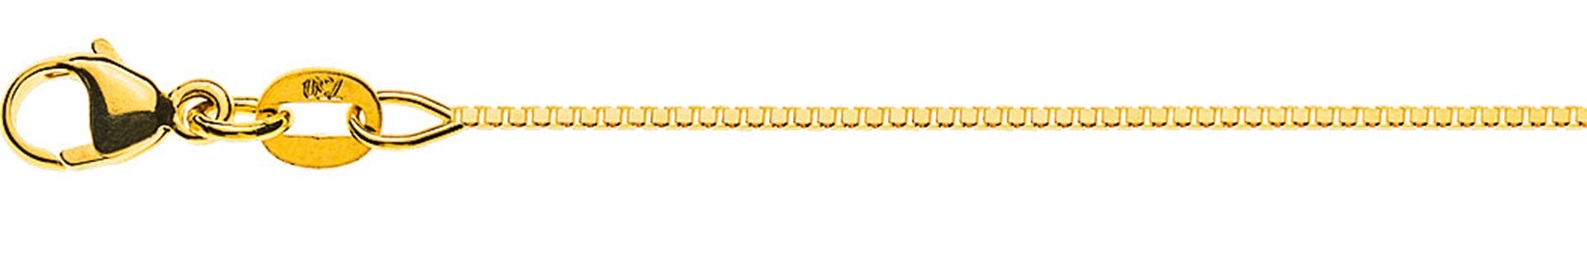 AURONOS Prestige Necklace yellow gold 18K Venetian chain diamond 60cm 0.8mm